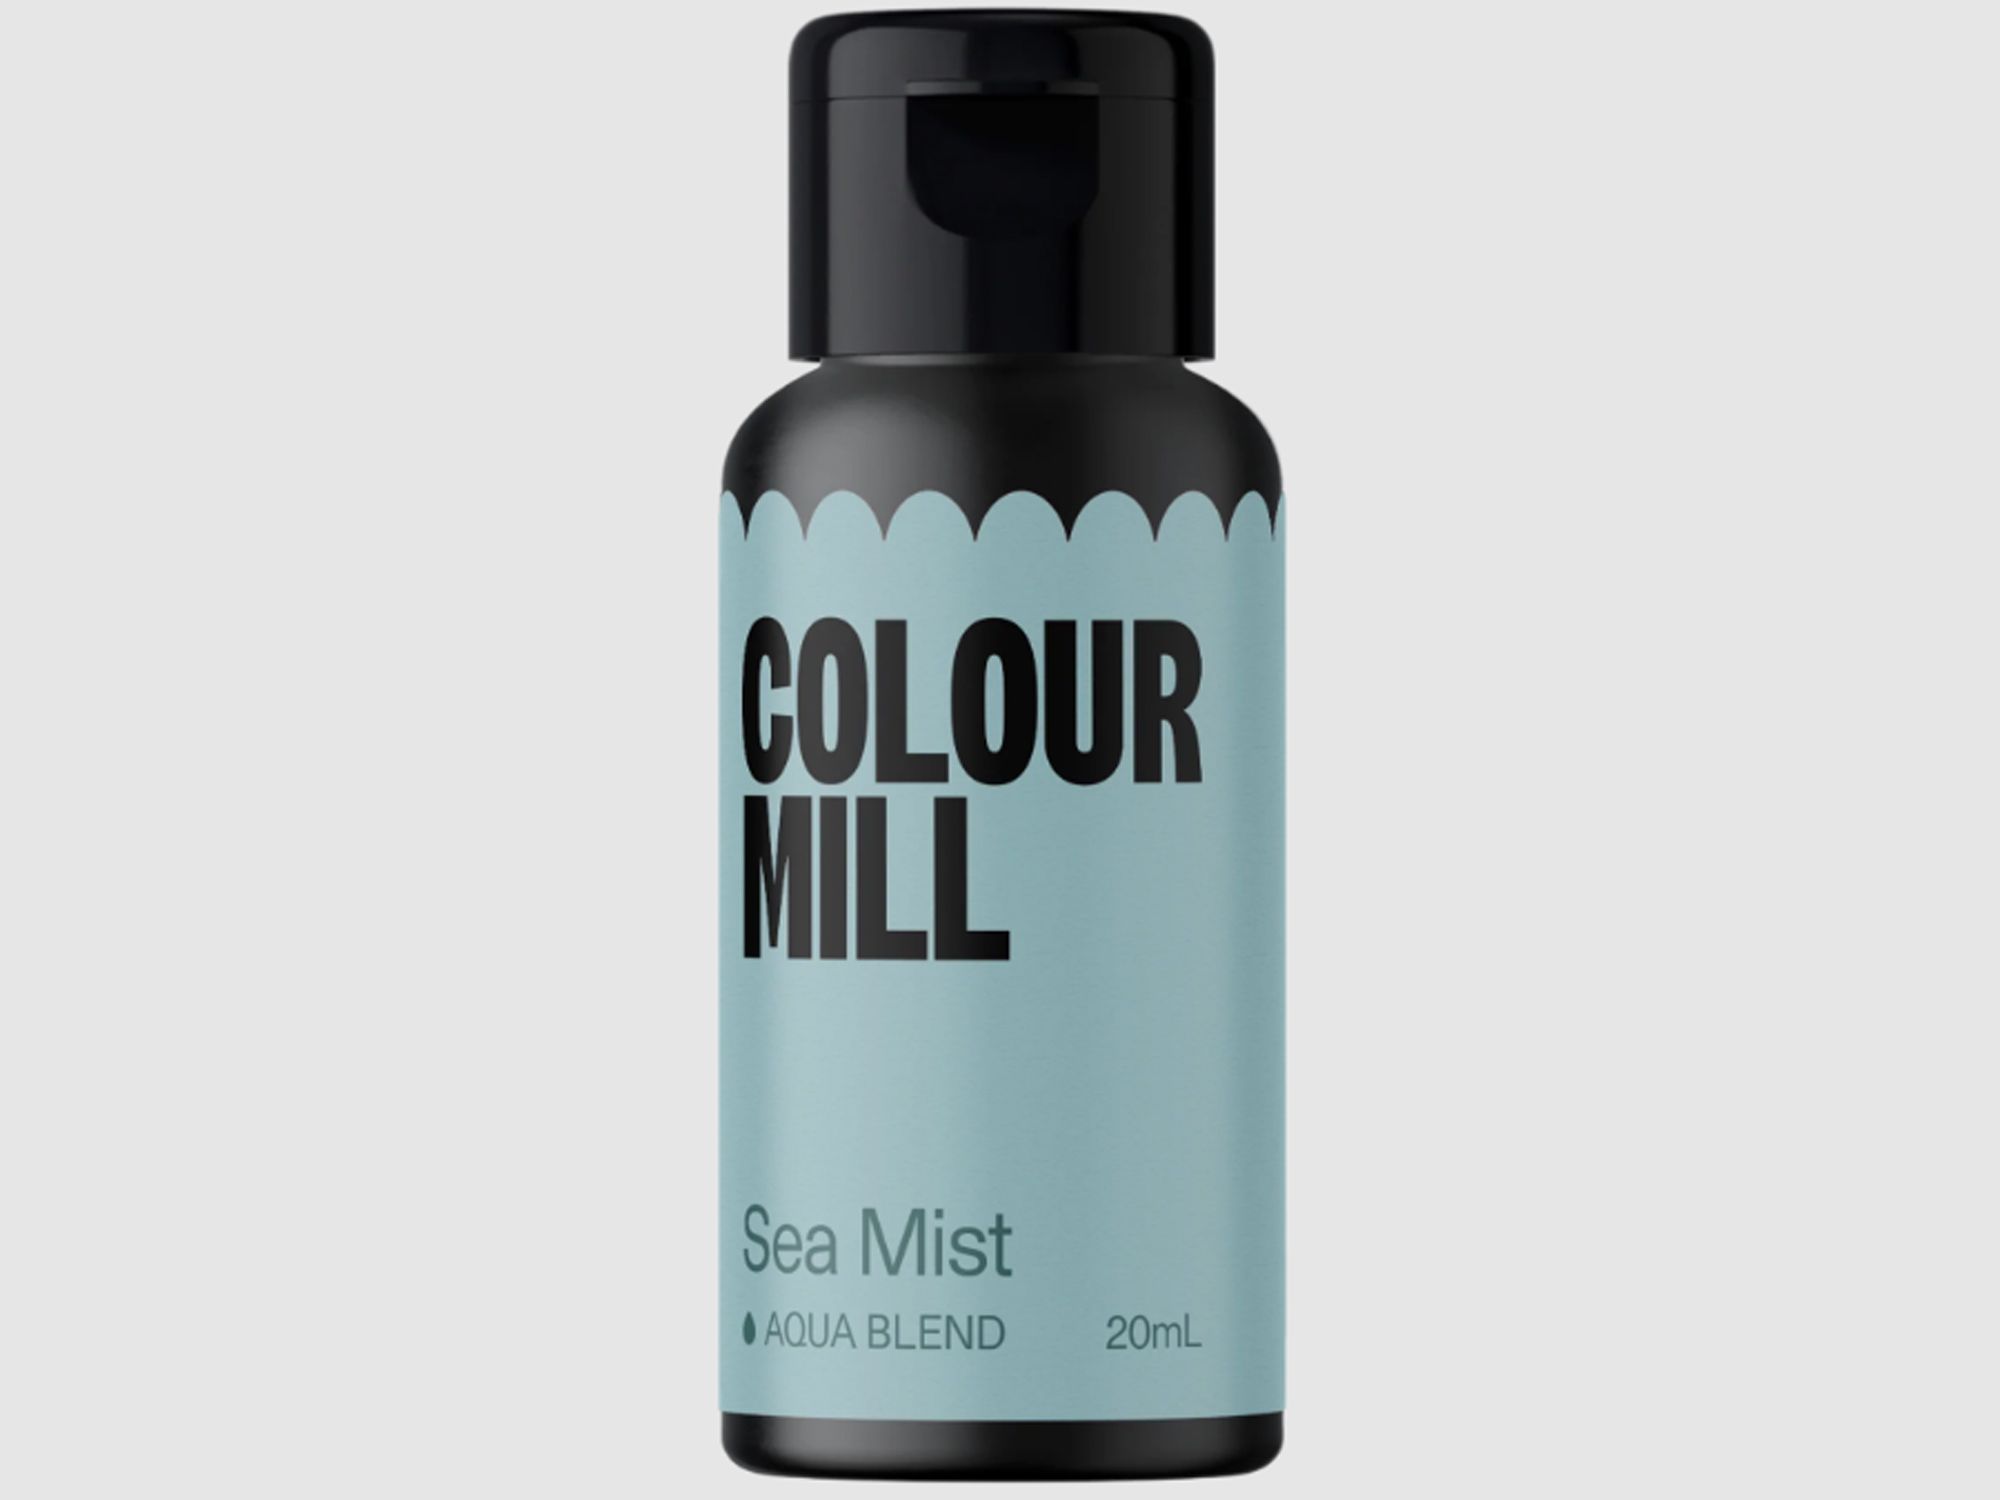 Colour Mill Sea Mist (Aqua Blend) 20ml